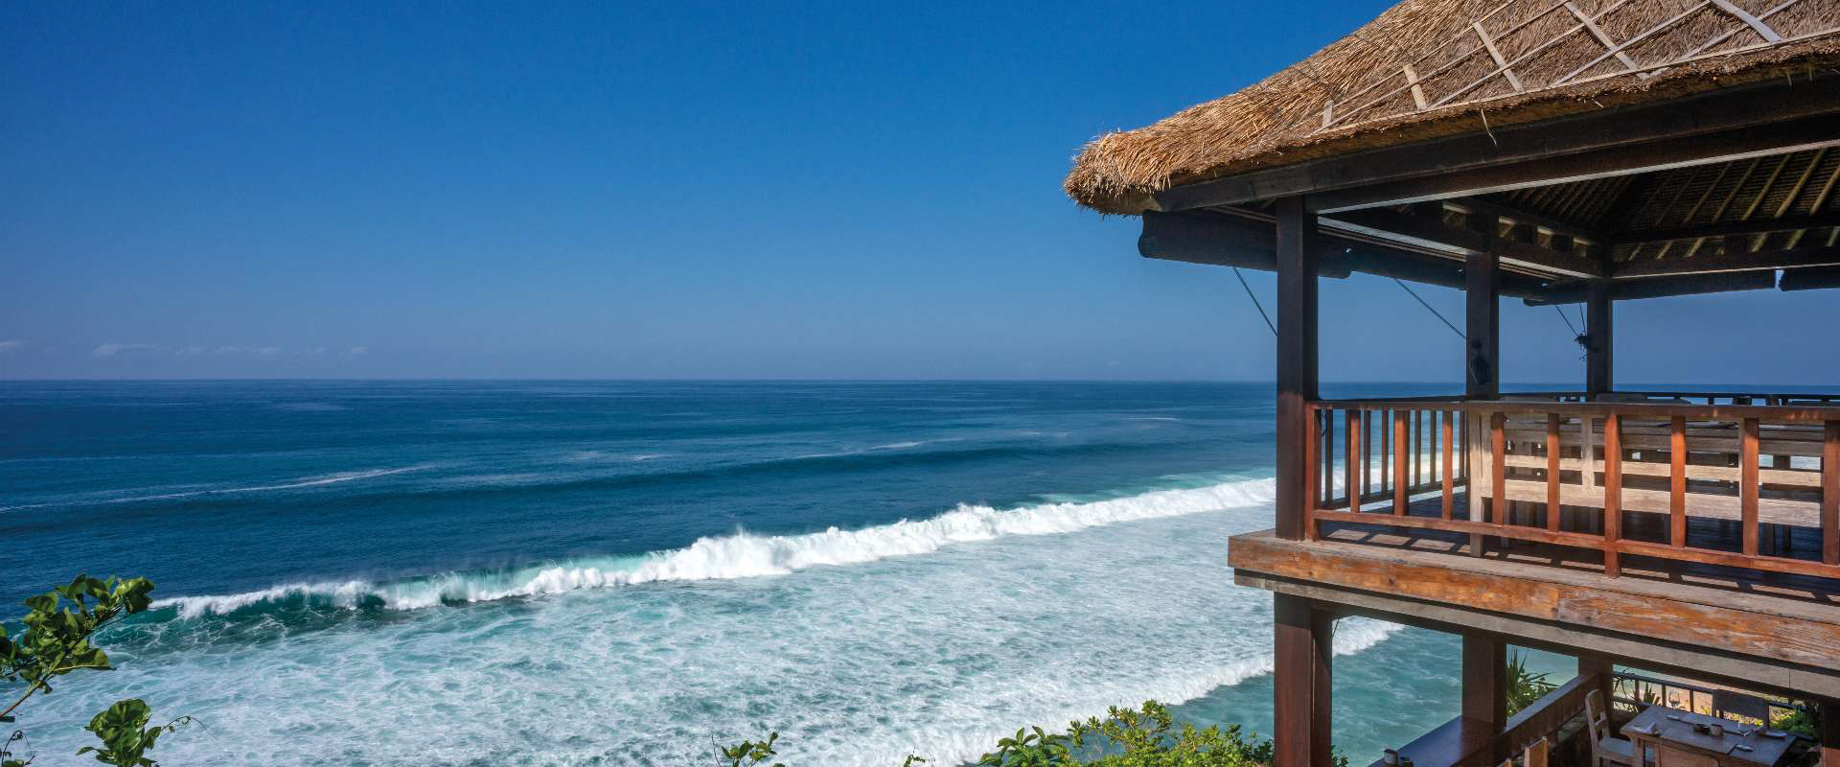 Bvlgari Resort Bali – Uluwatu, Bali, Indonesia – La Spiaggia Restaurant Cliffside Ocean View